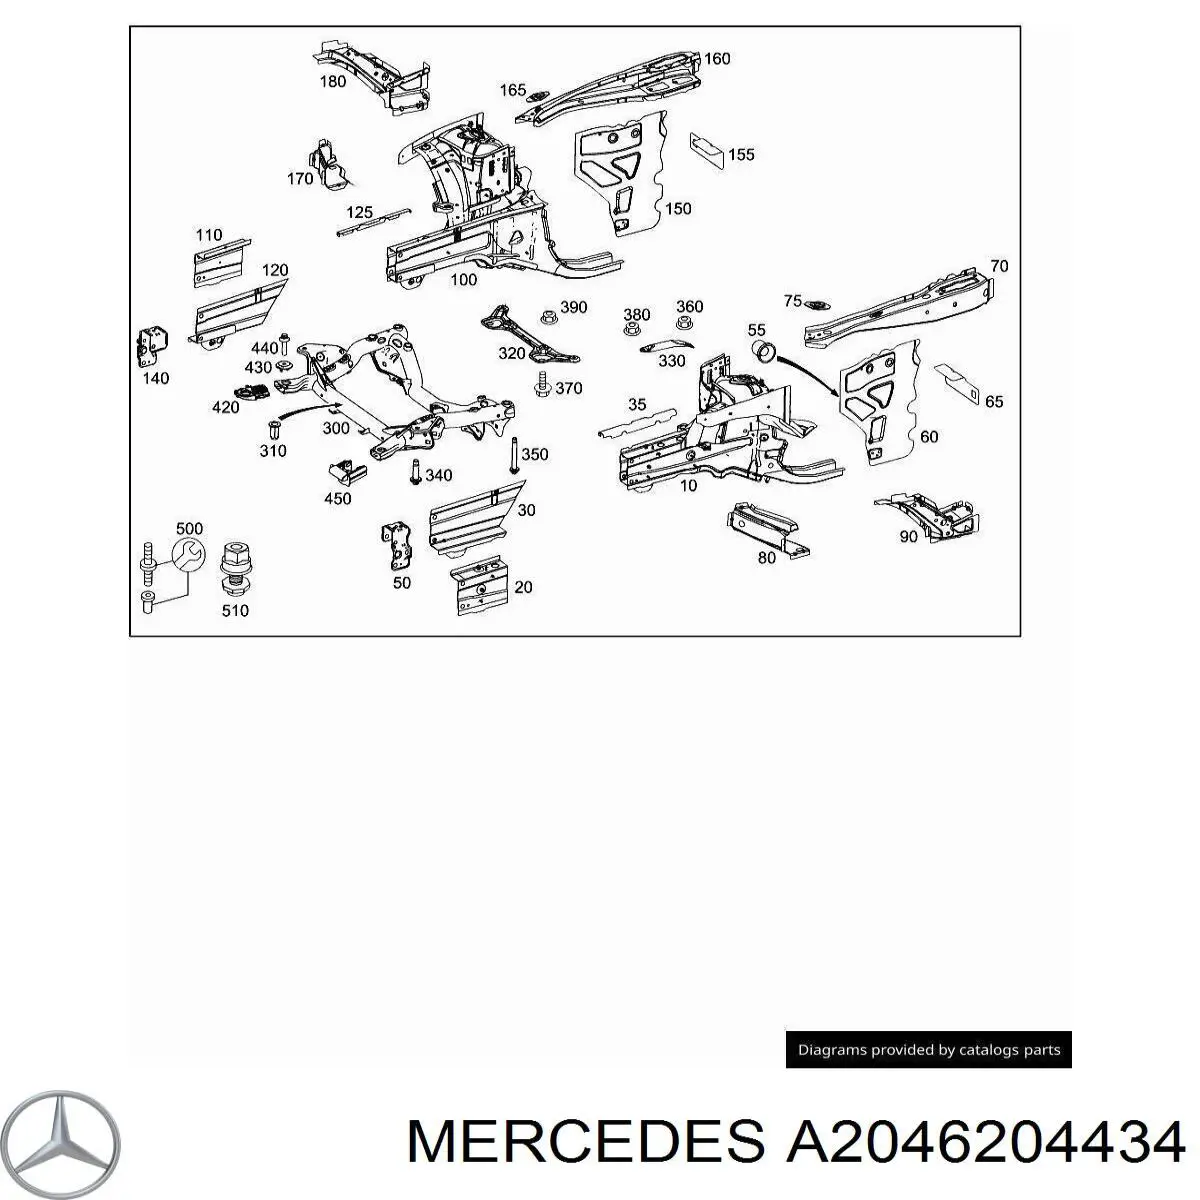 A2046204434 Mercedes larguero delantero derecho